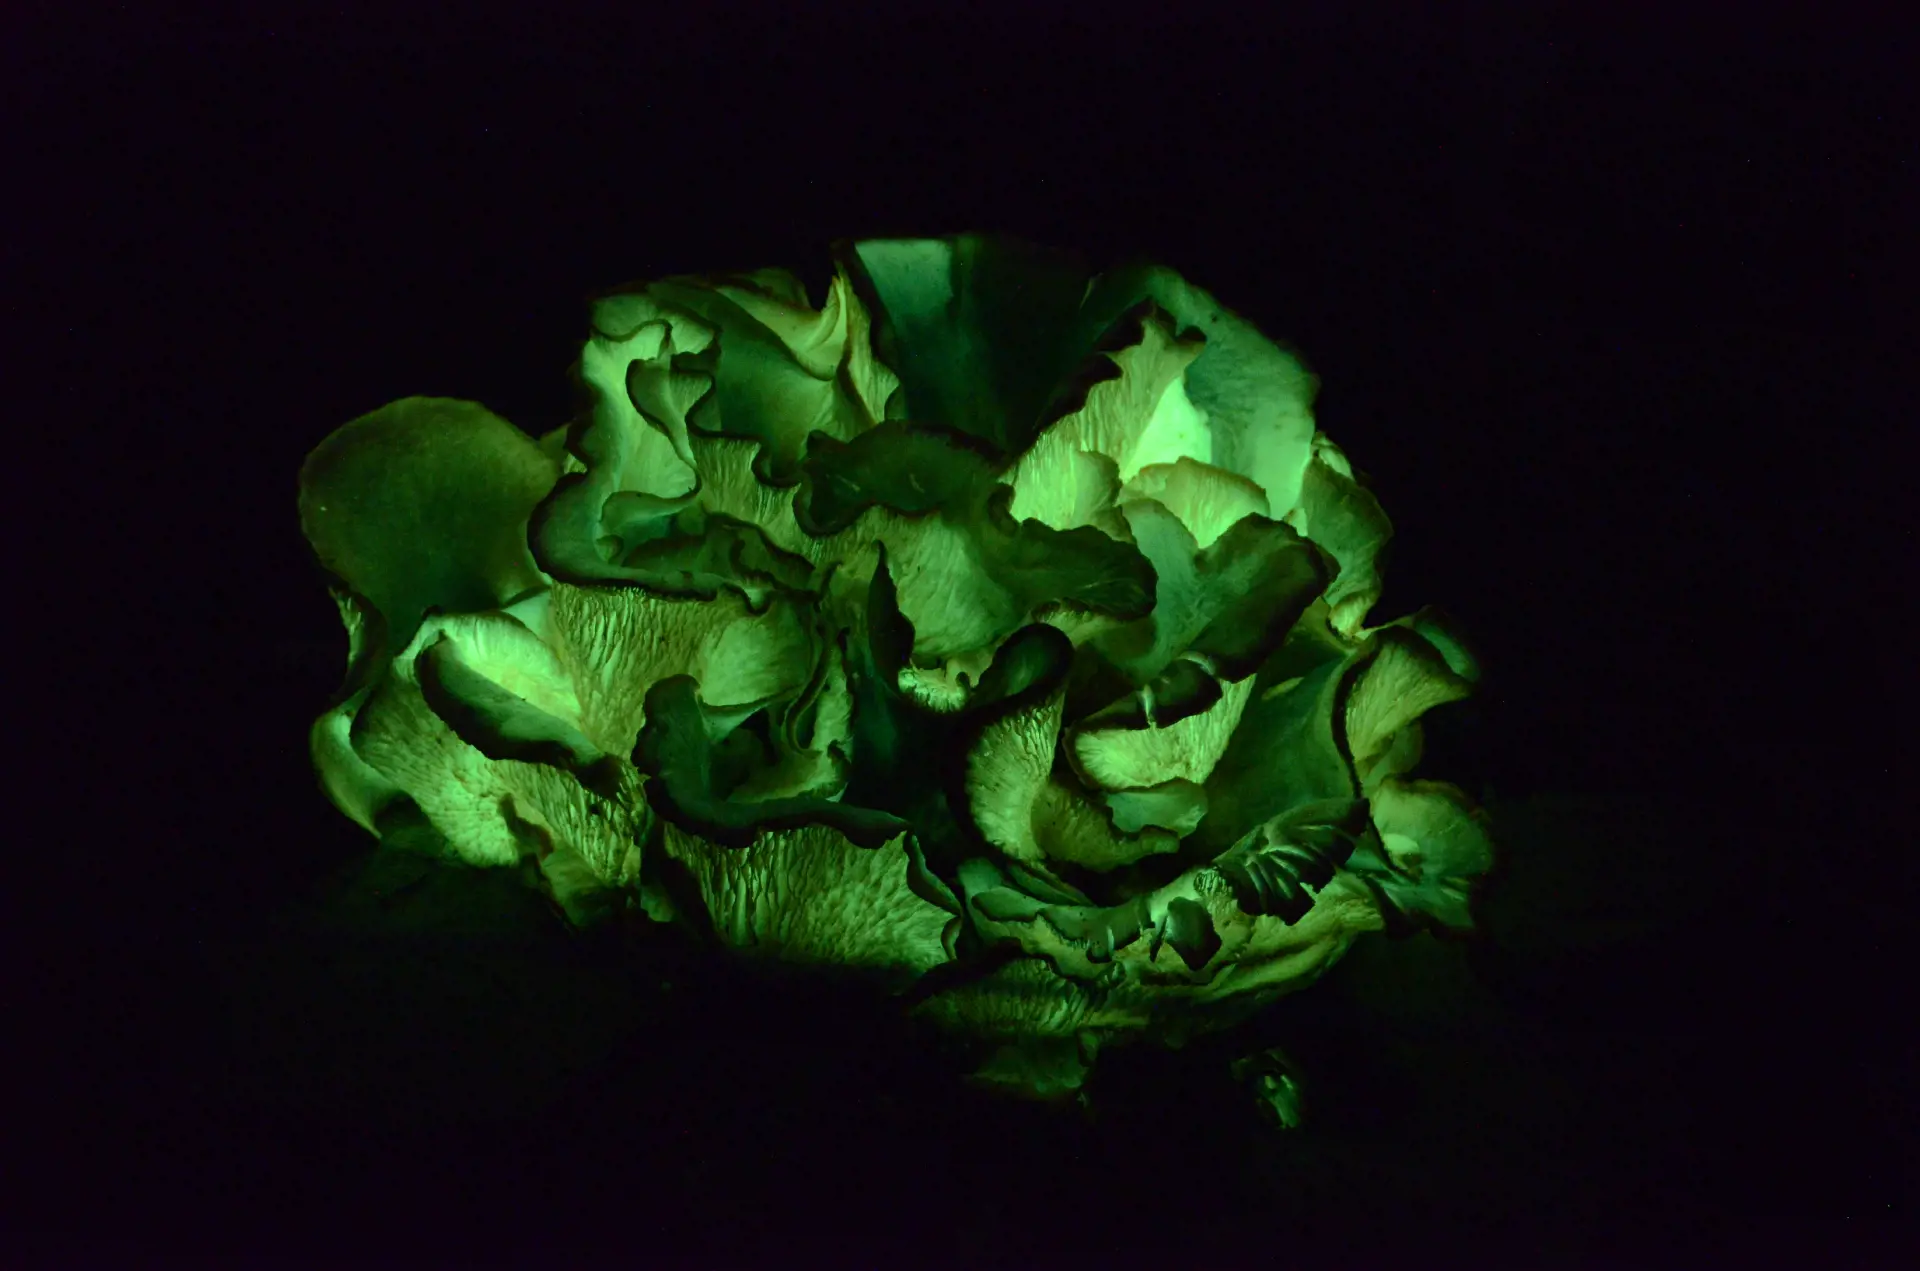 A glowing green mushroom in Tasmania